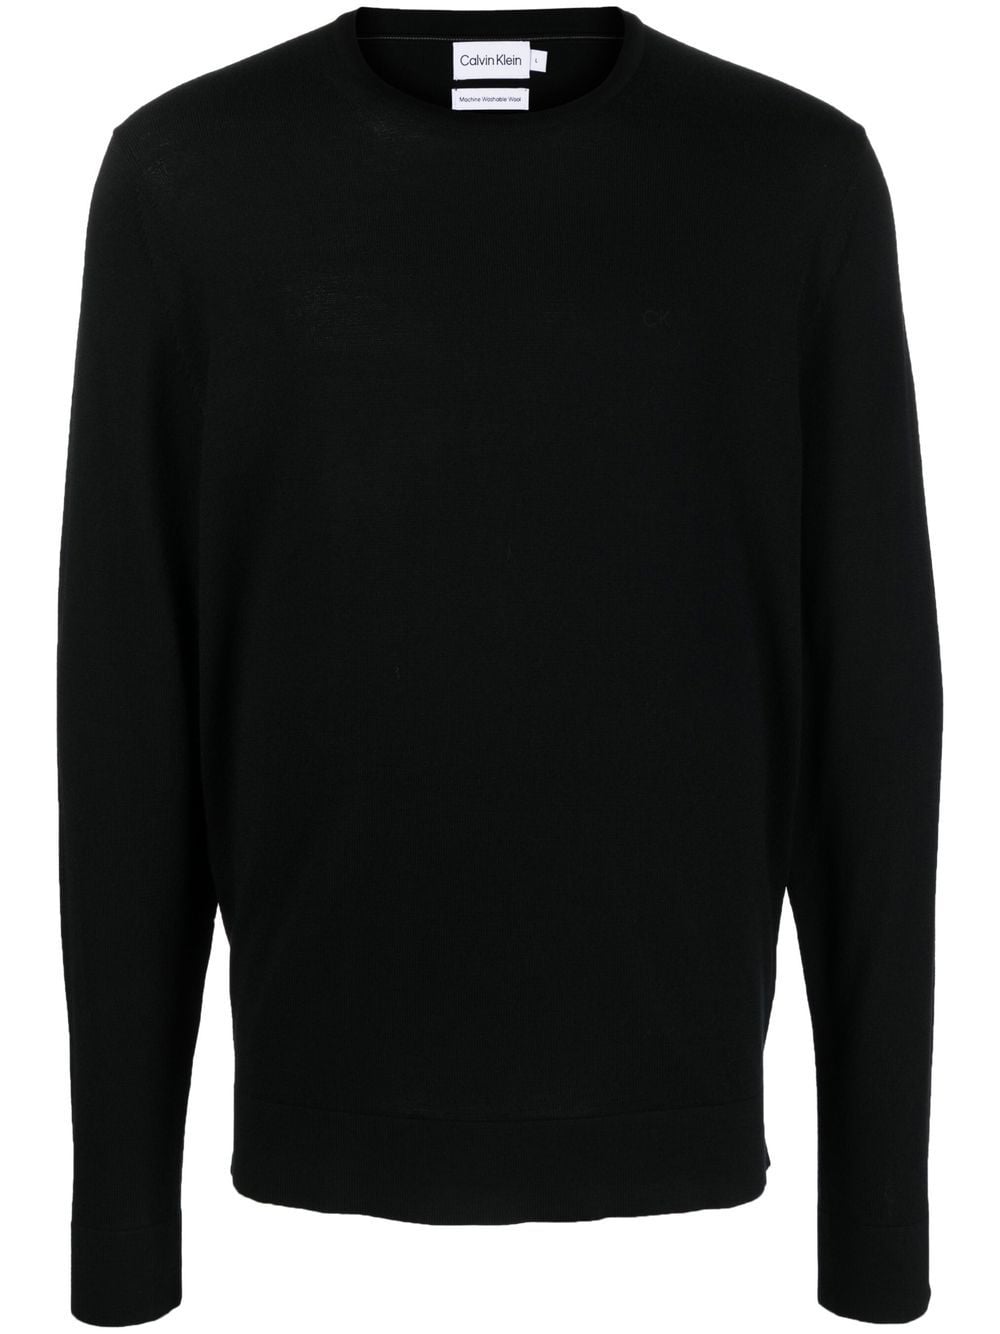 Image 1 of Calvin Klein 라운드 넥 니트 스웨터